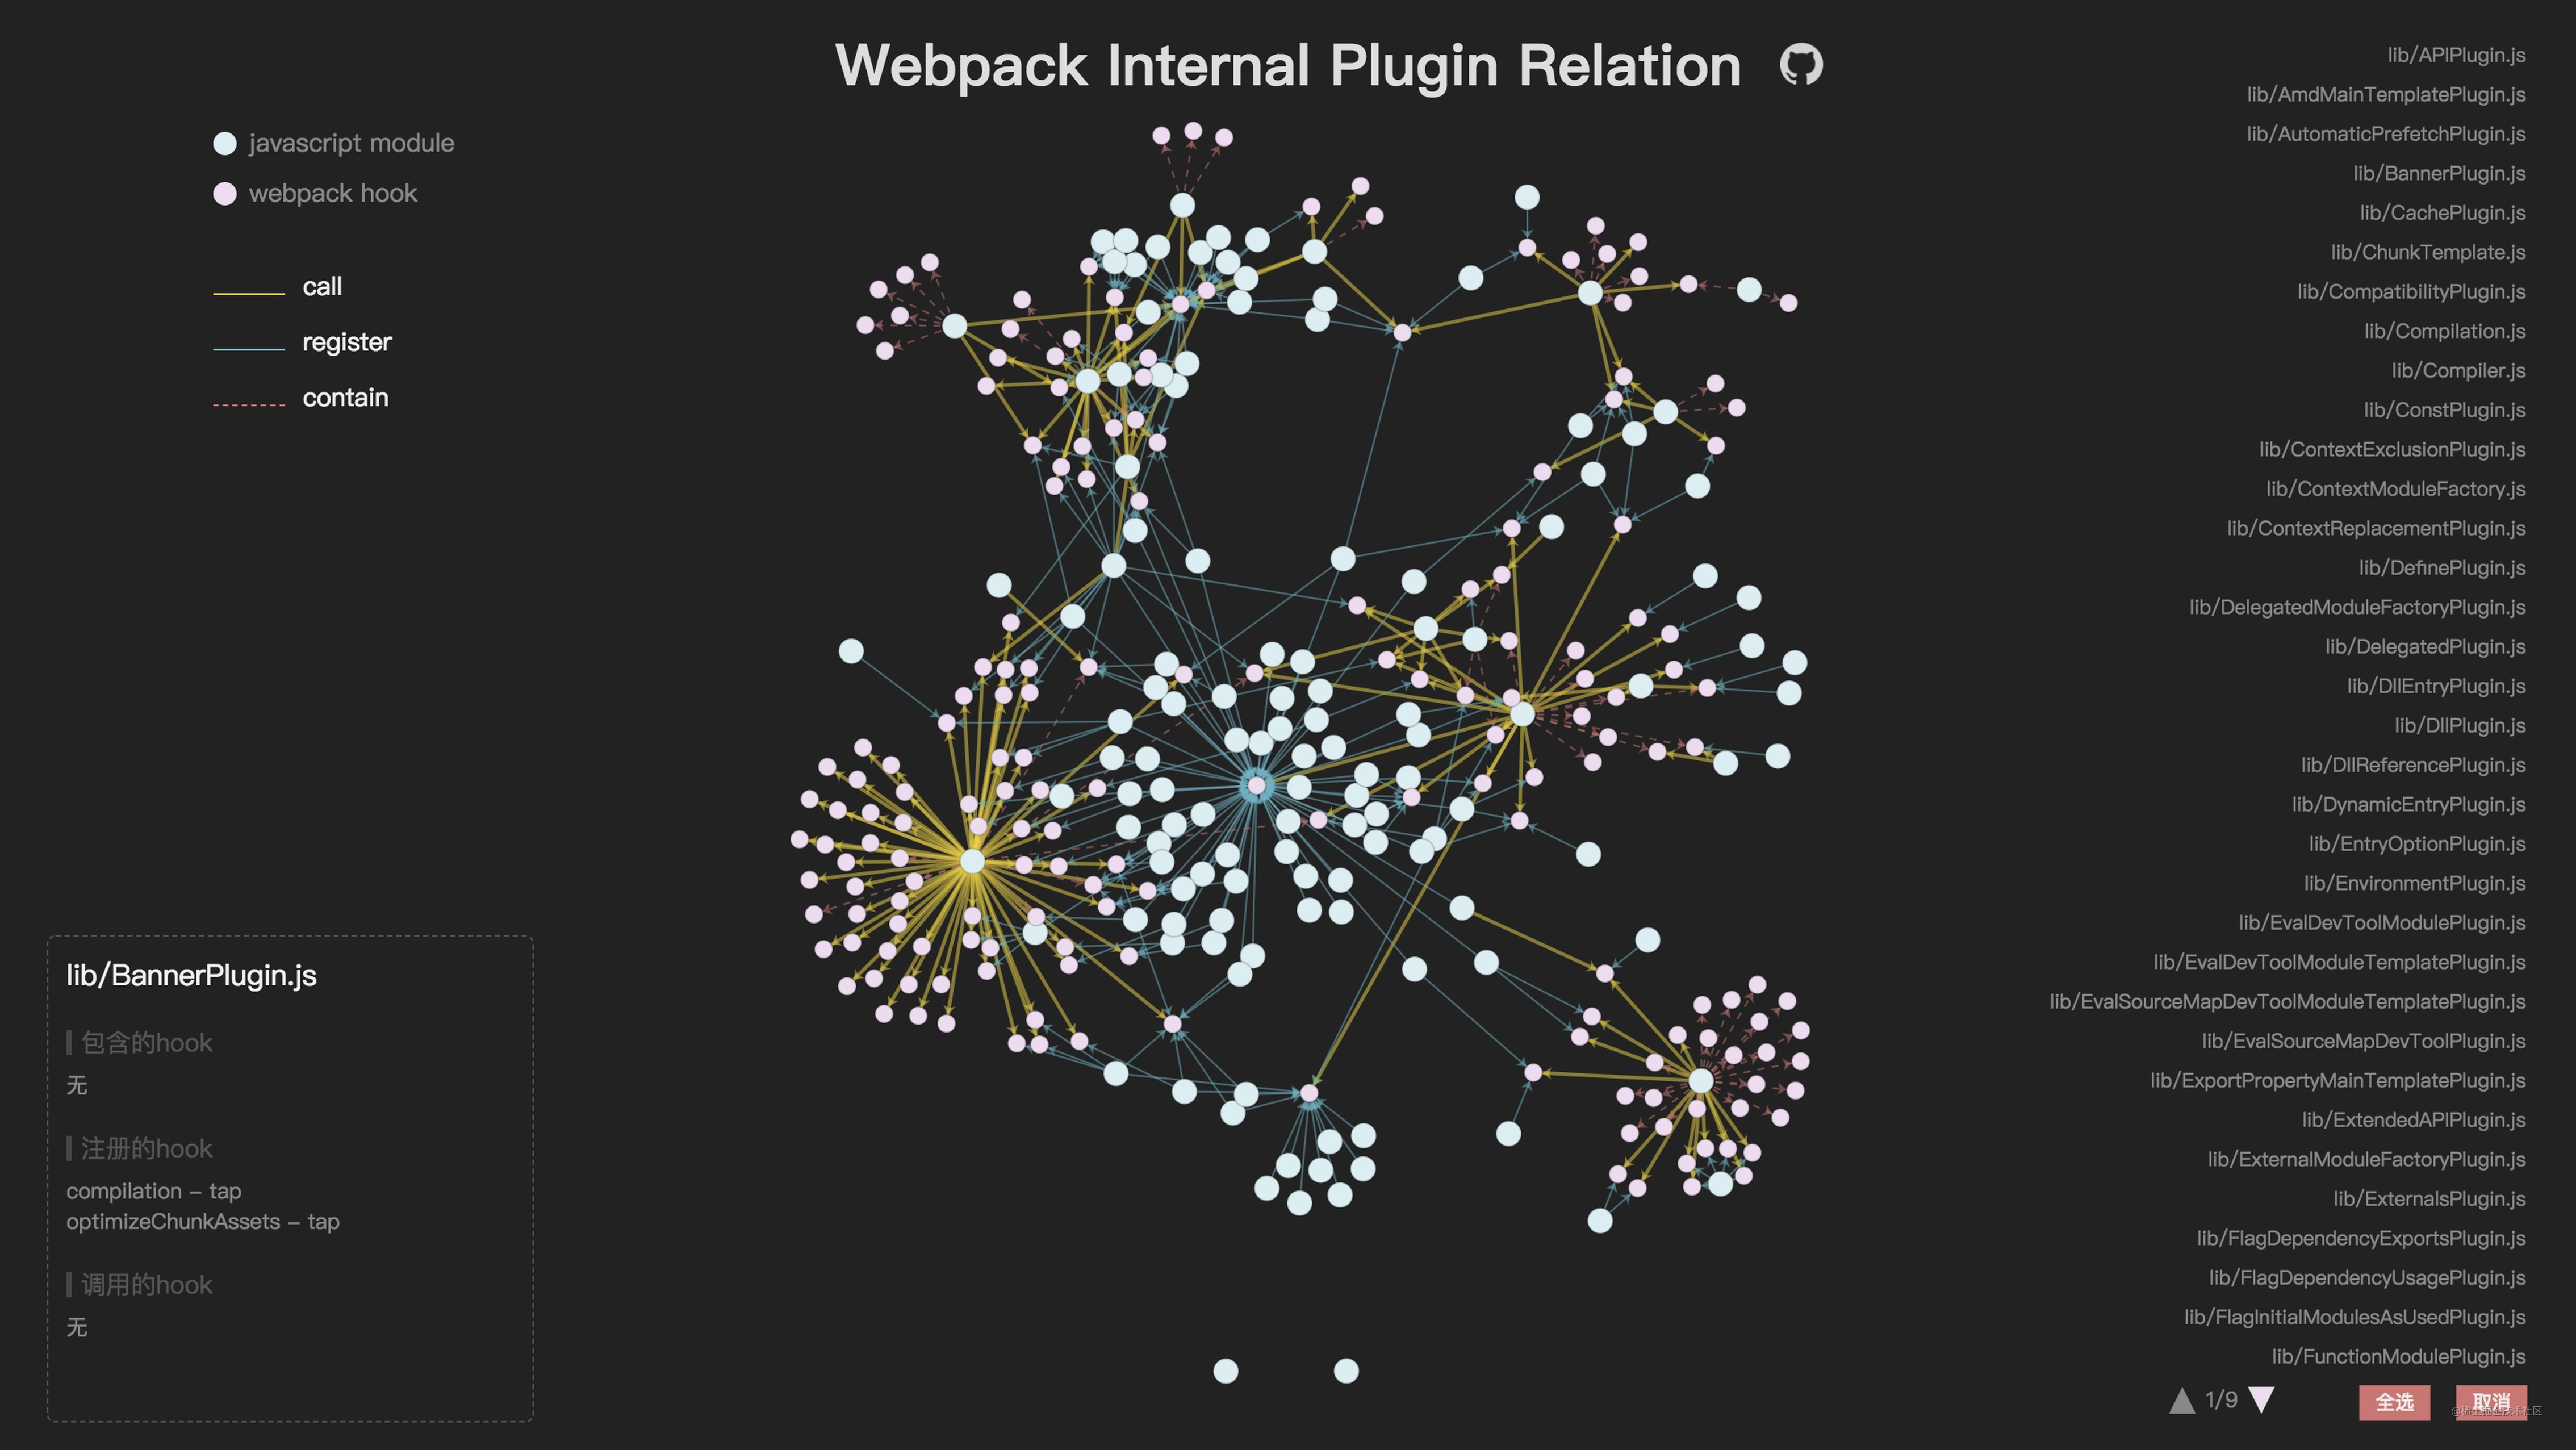 【webpack进阶】可视化展示webpack内部插件与钩子关系📈